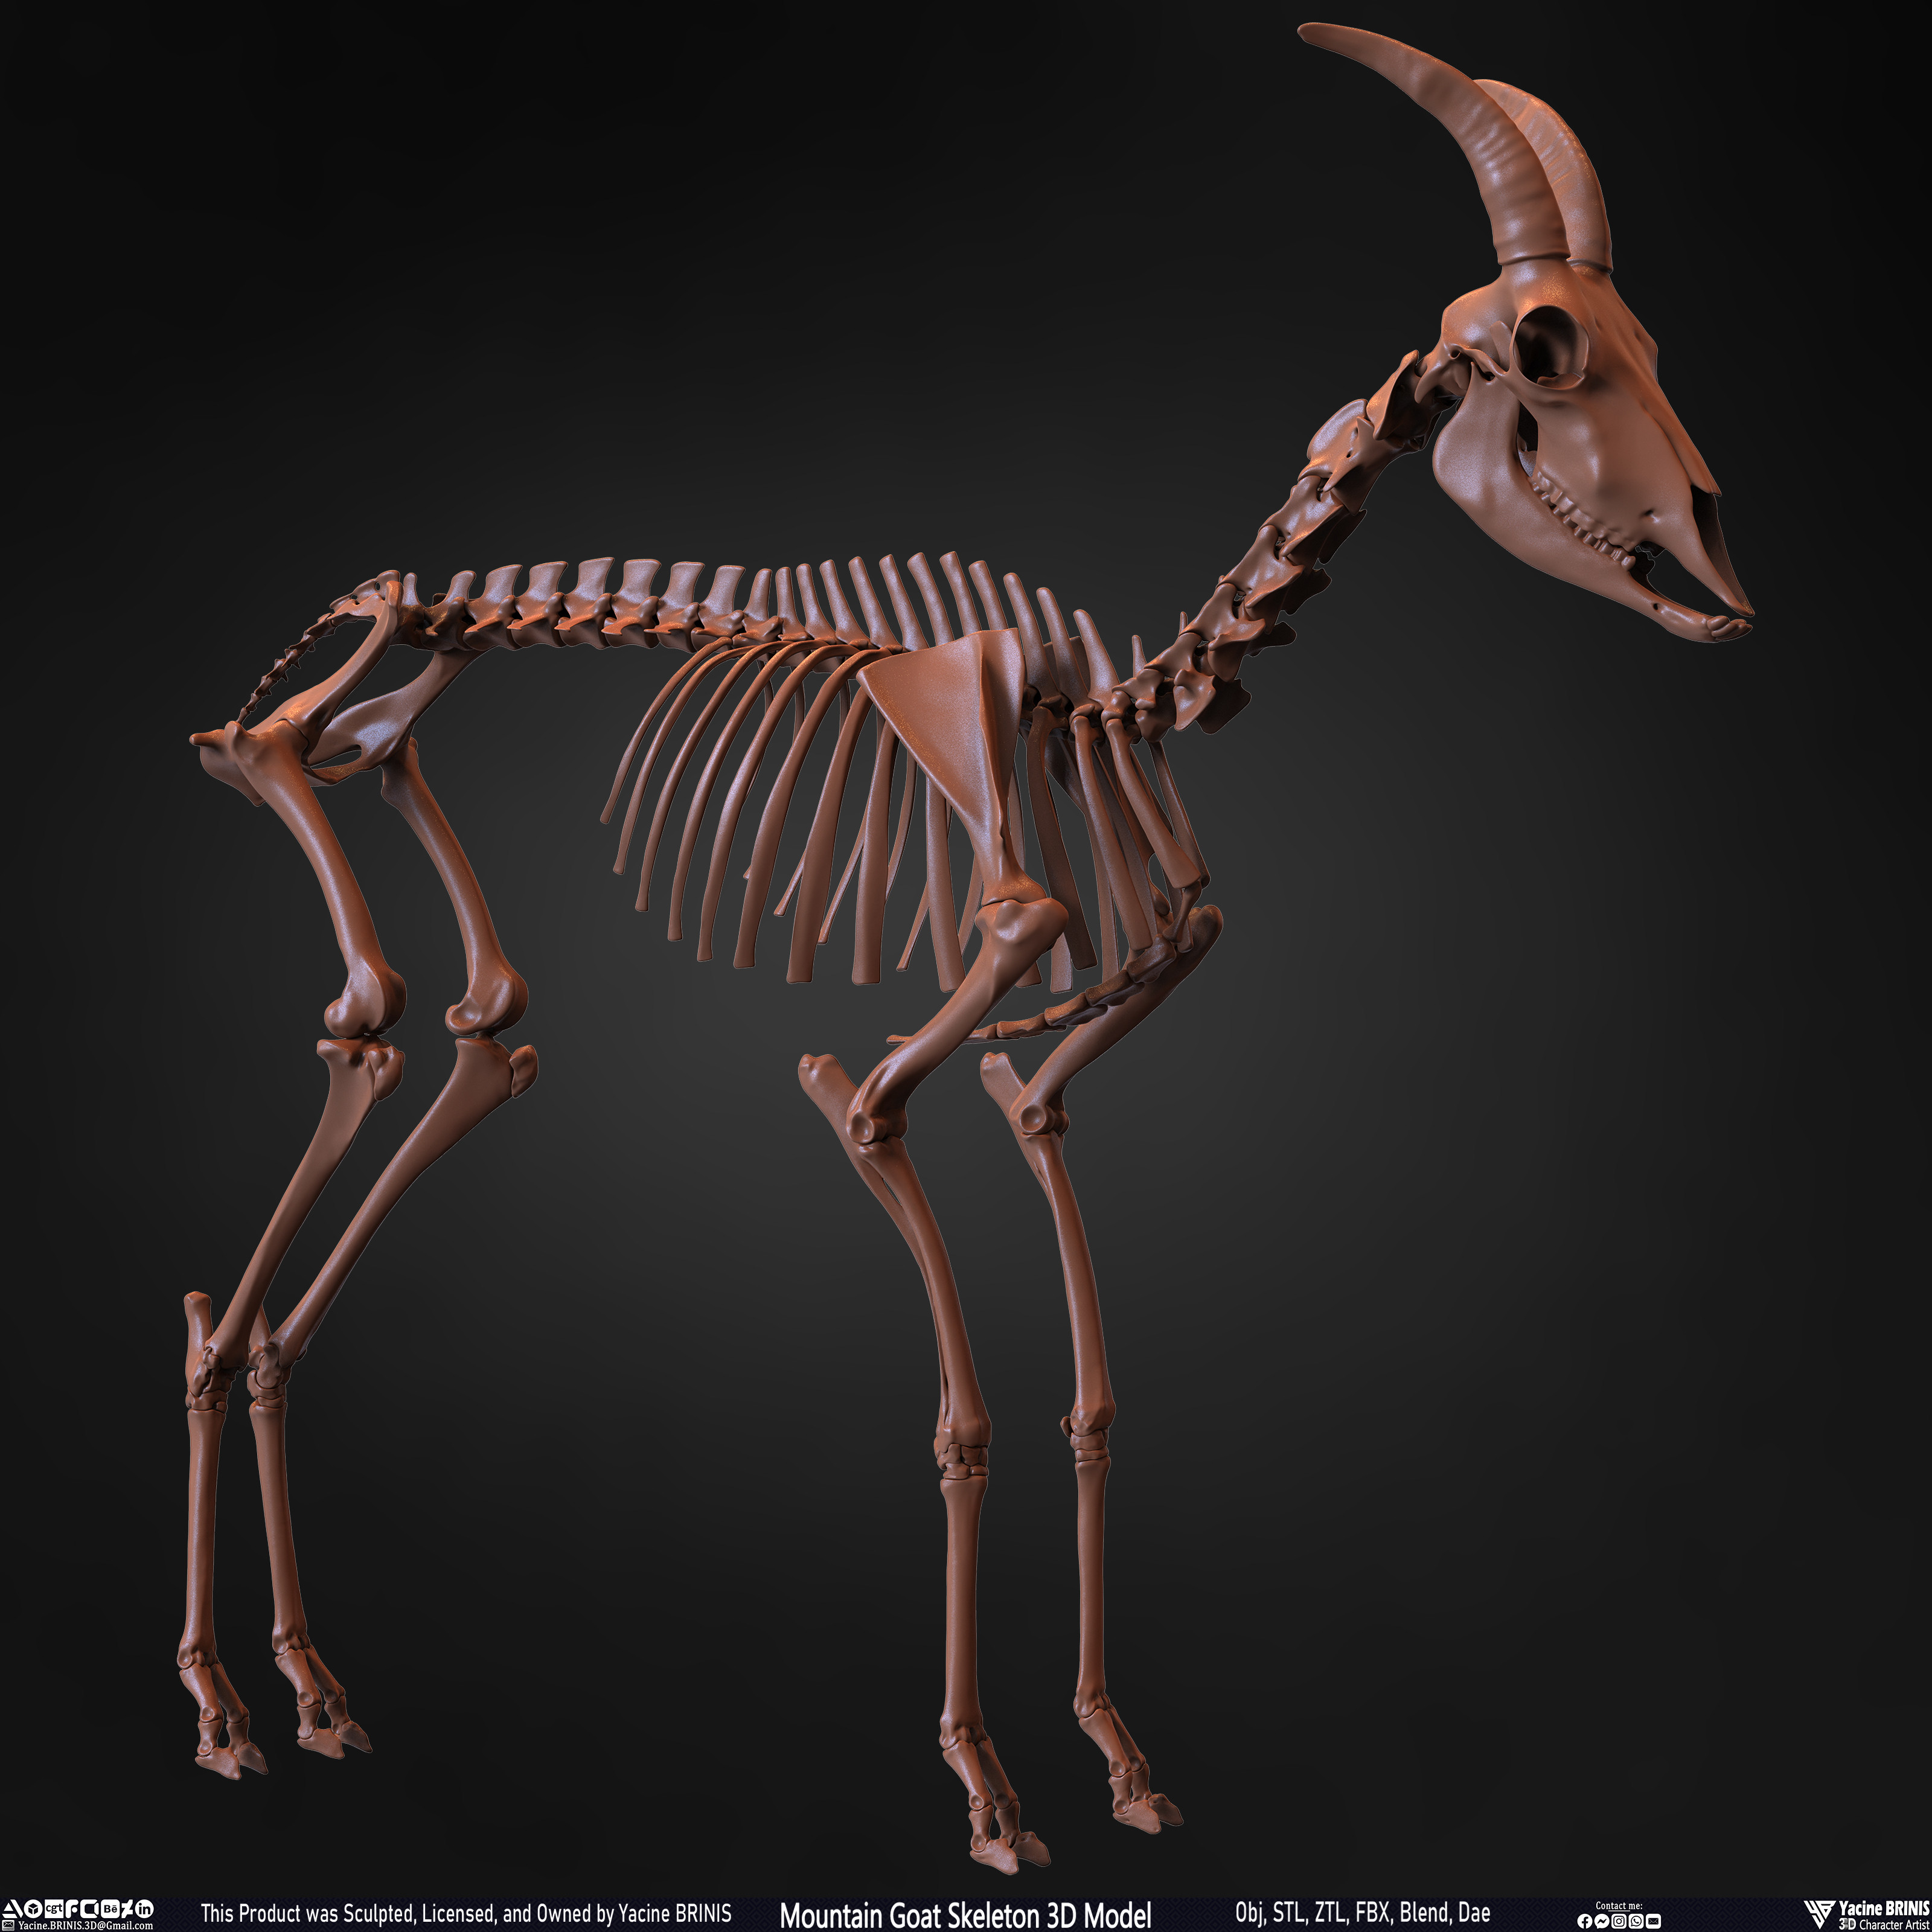 Mountain Goat Skeleton 3D Model Sculpted by Yacine BRINIS Set 025